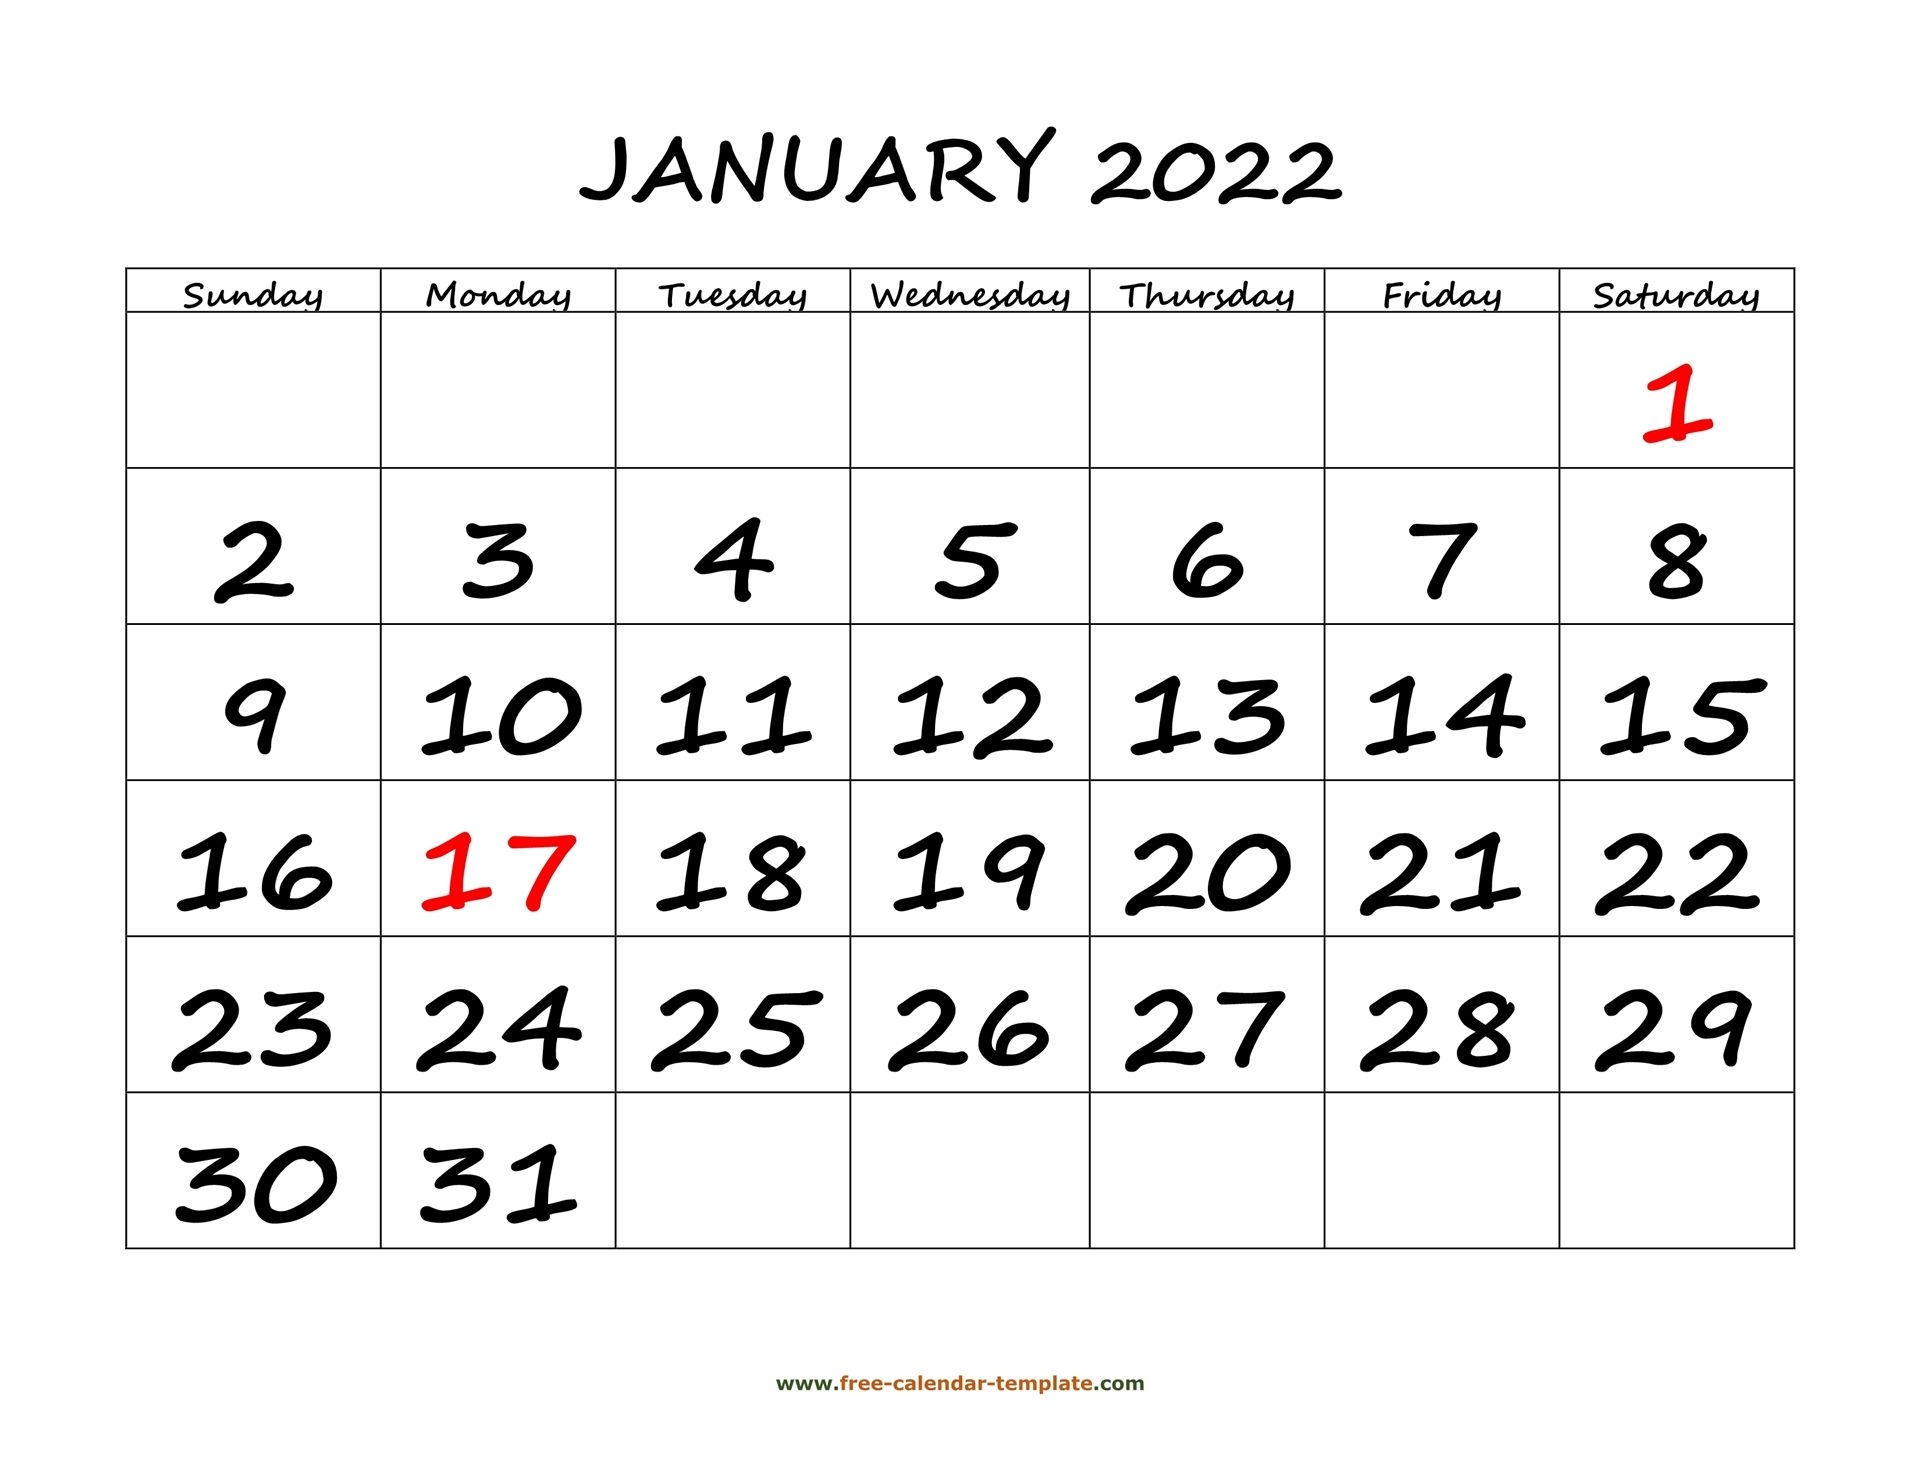 Printable Monthly Calendar 2022 | Free-Calendar-Template